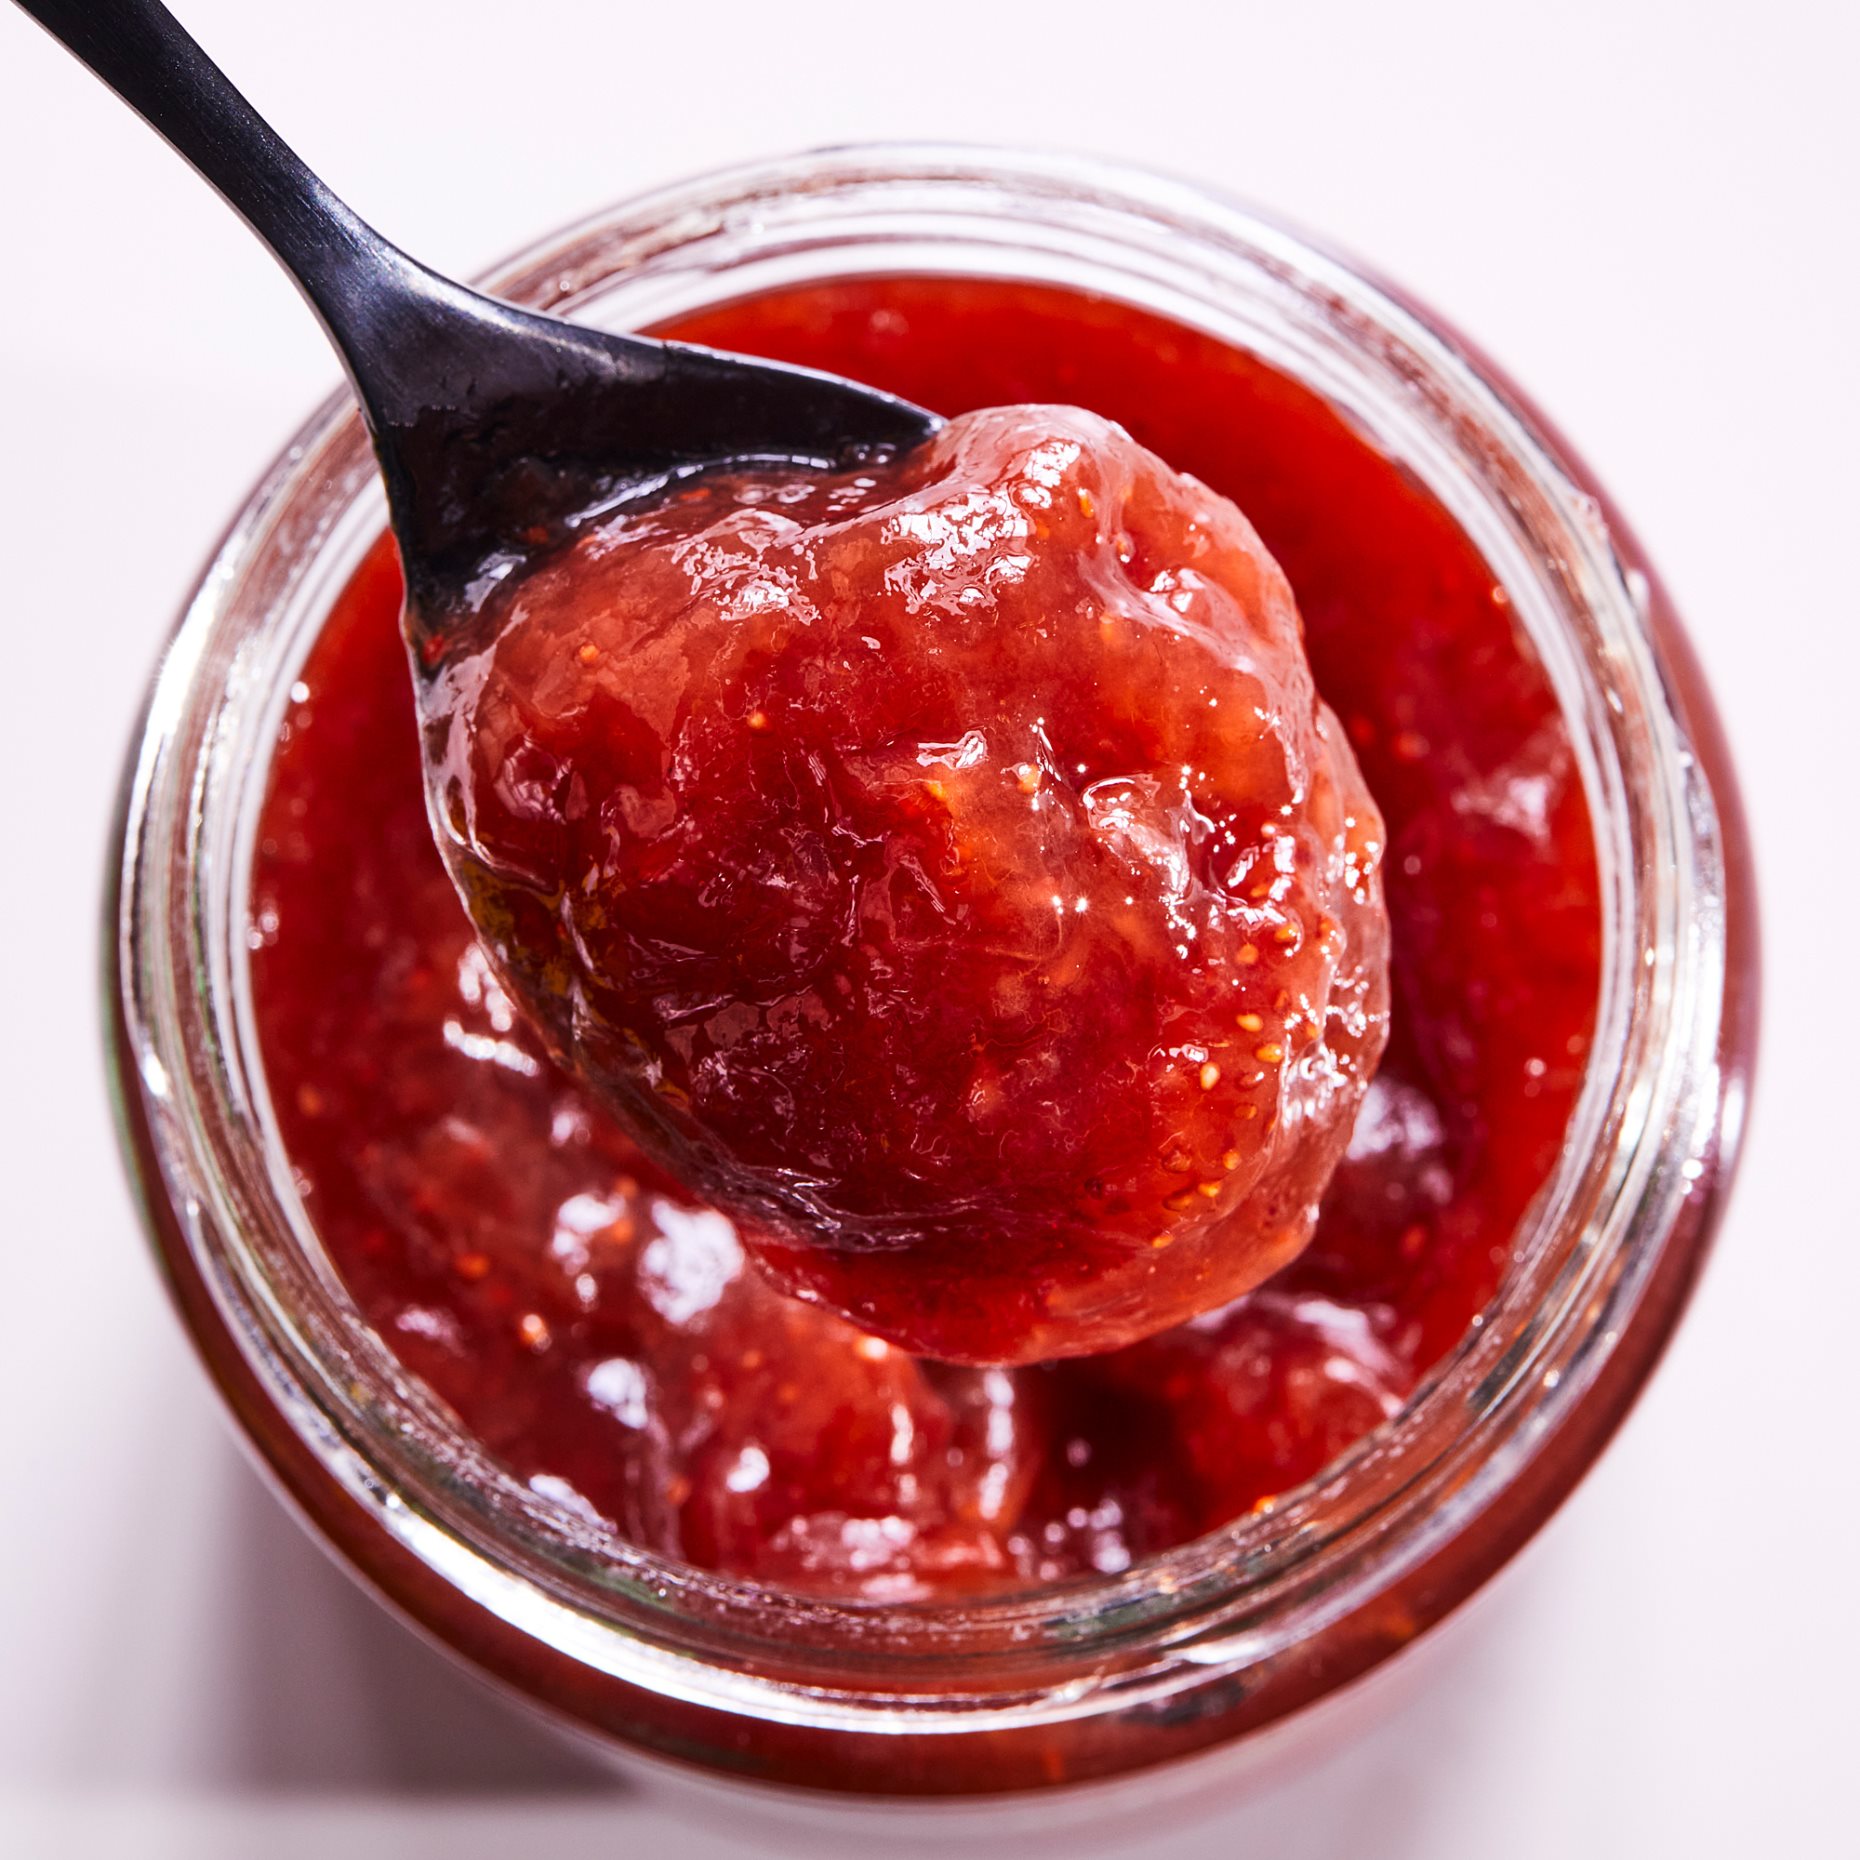 SYLT JORDGUBB, strawberry jam organic, 400 g, 701.509.20